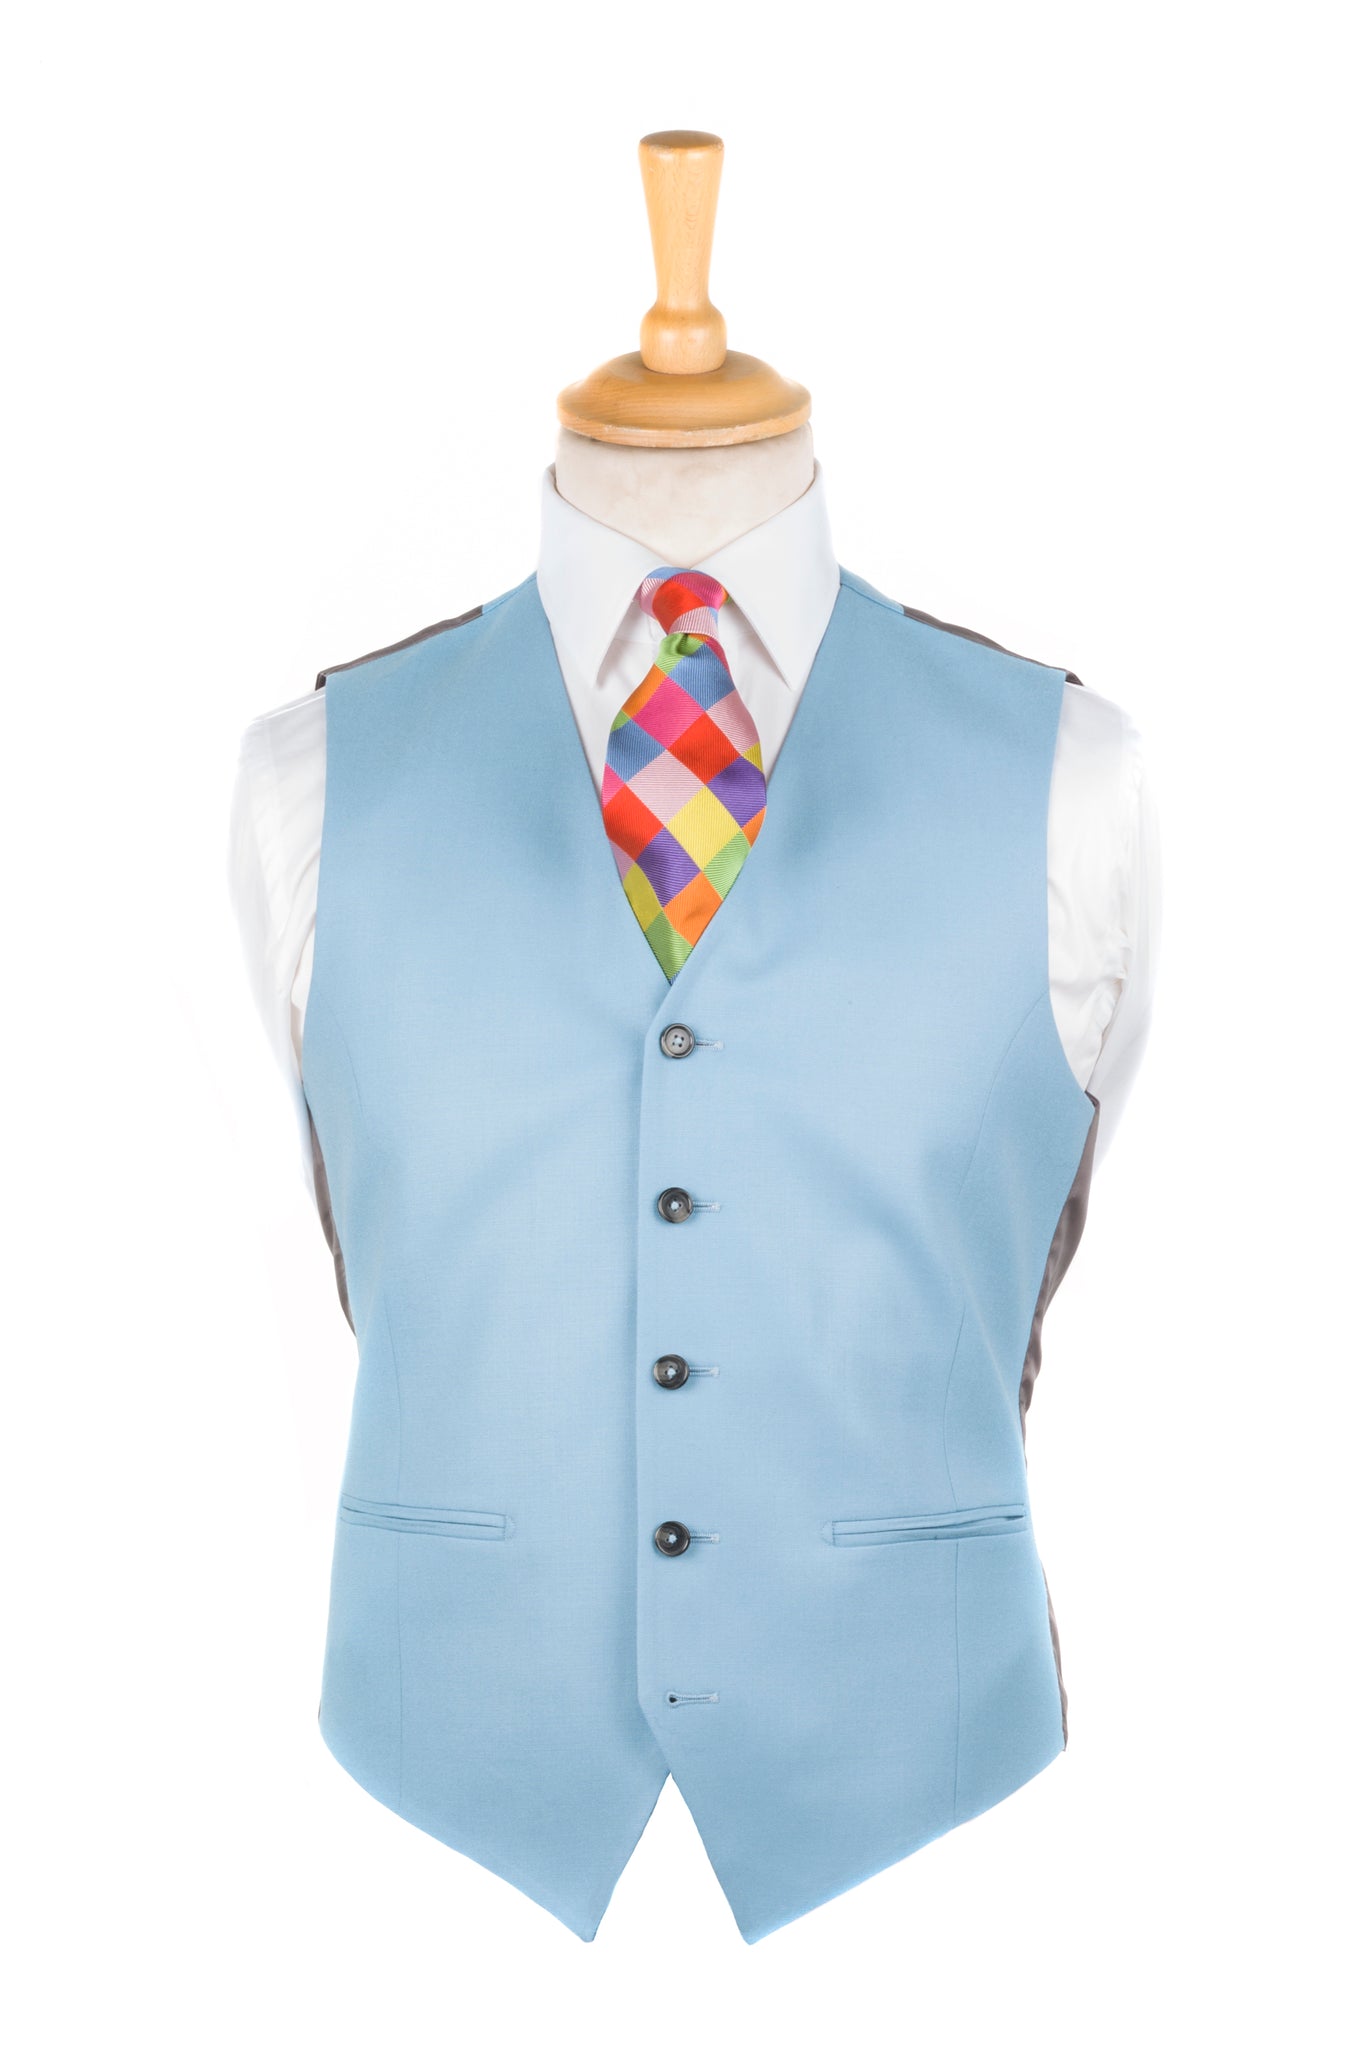 Regent - Waistcoat - Sky Blue - Morning suit - Wedding - Regent Tailoring